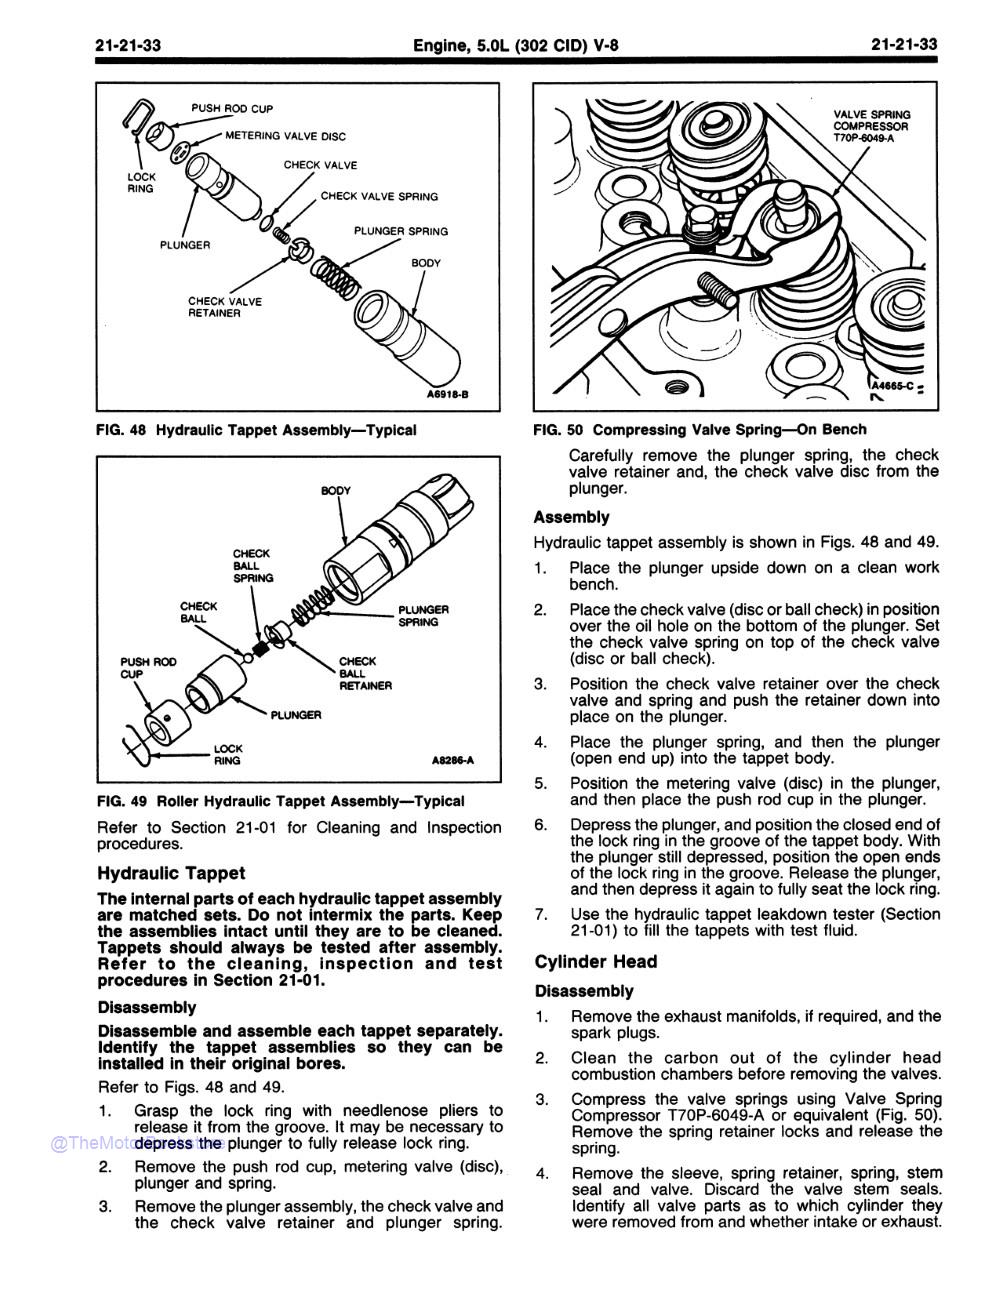 1987 Ford Mustang, Thunderbird, Continental, Mark VII, Cougar Shop Manuals - Sample Page 2